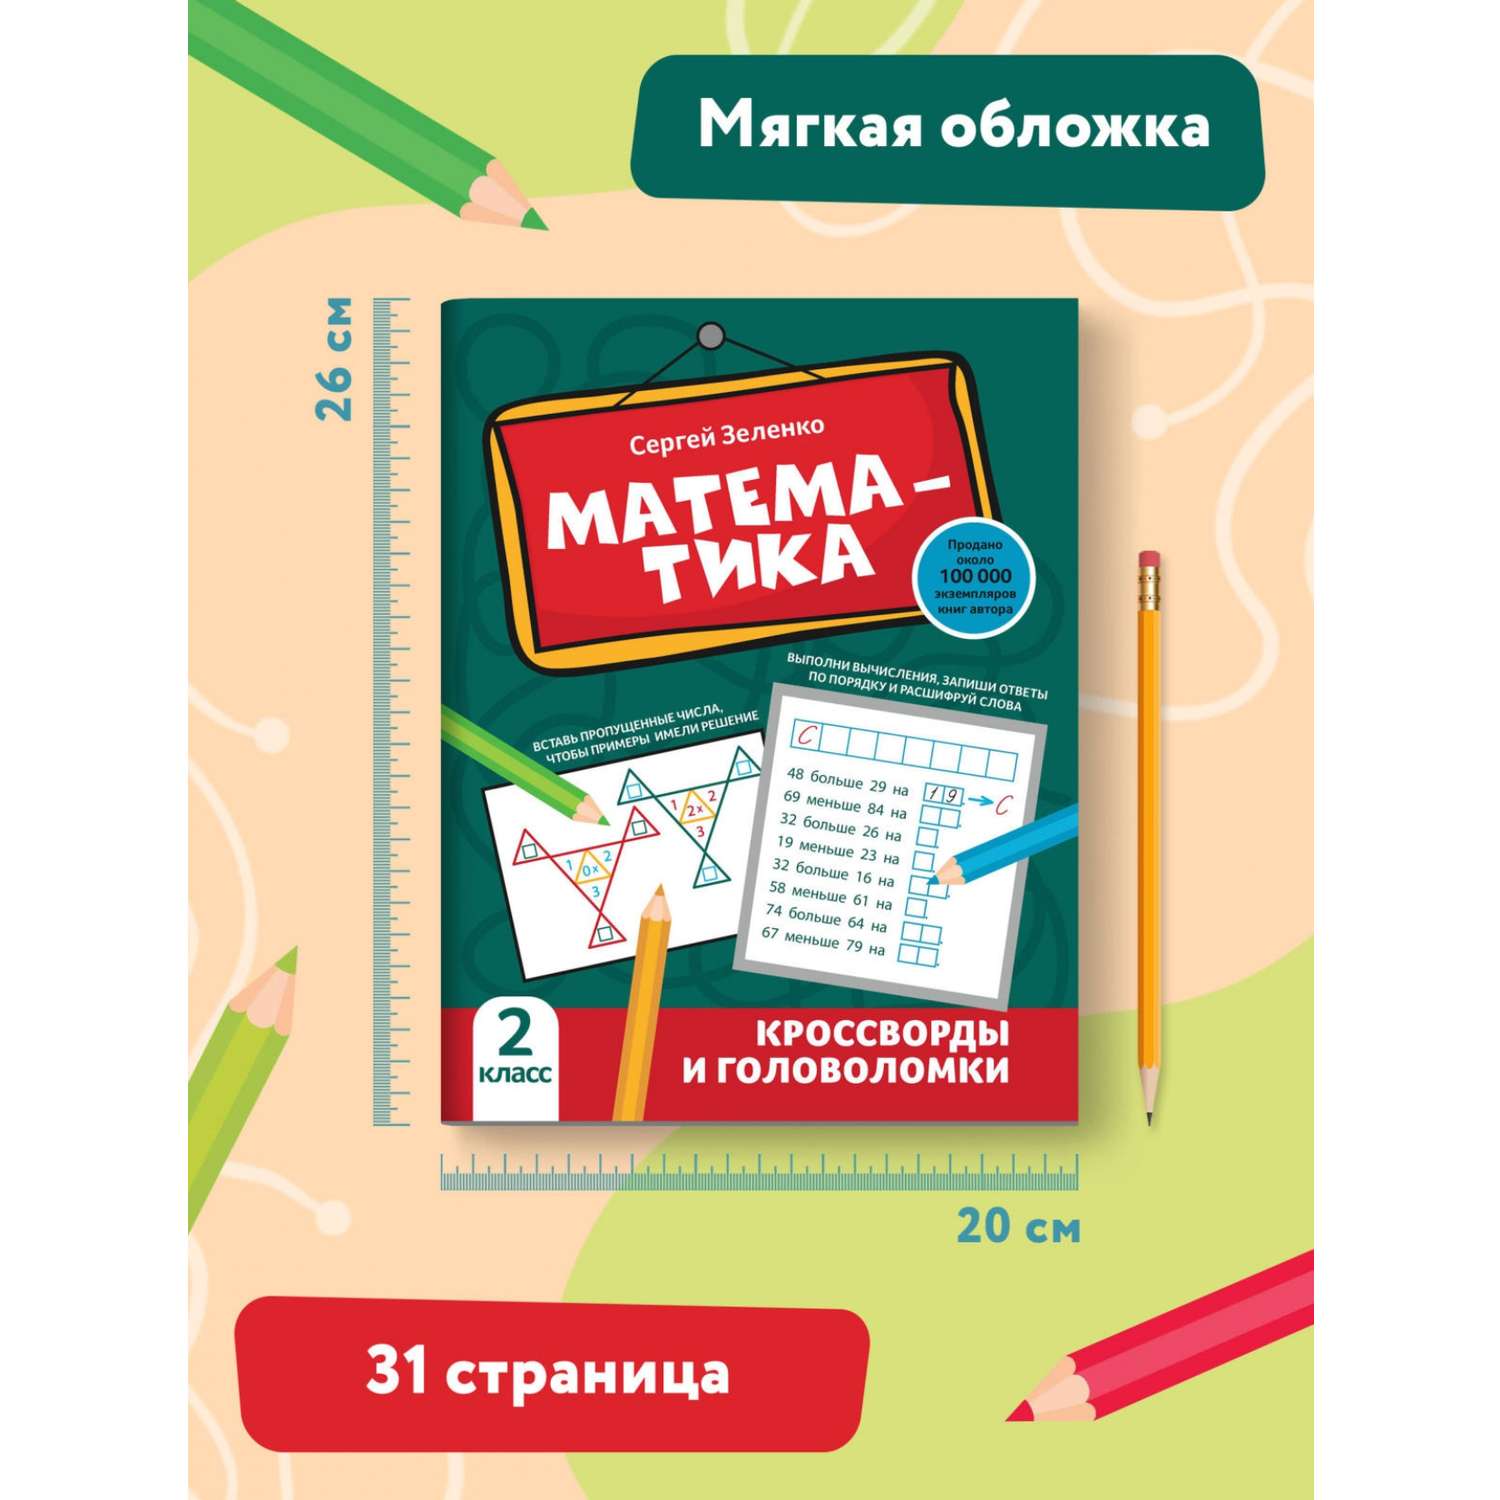 Книга Феникс Математика: кроссворды и головоломки: 2 класс - фото 8